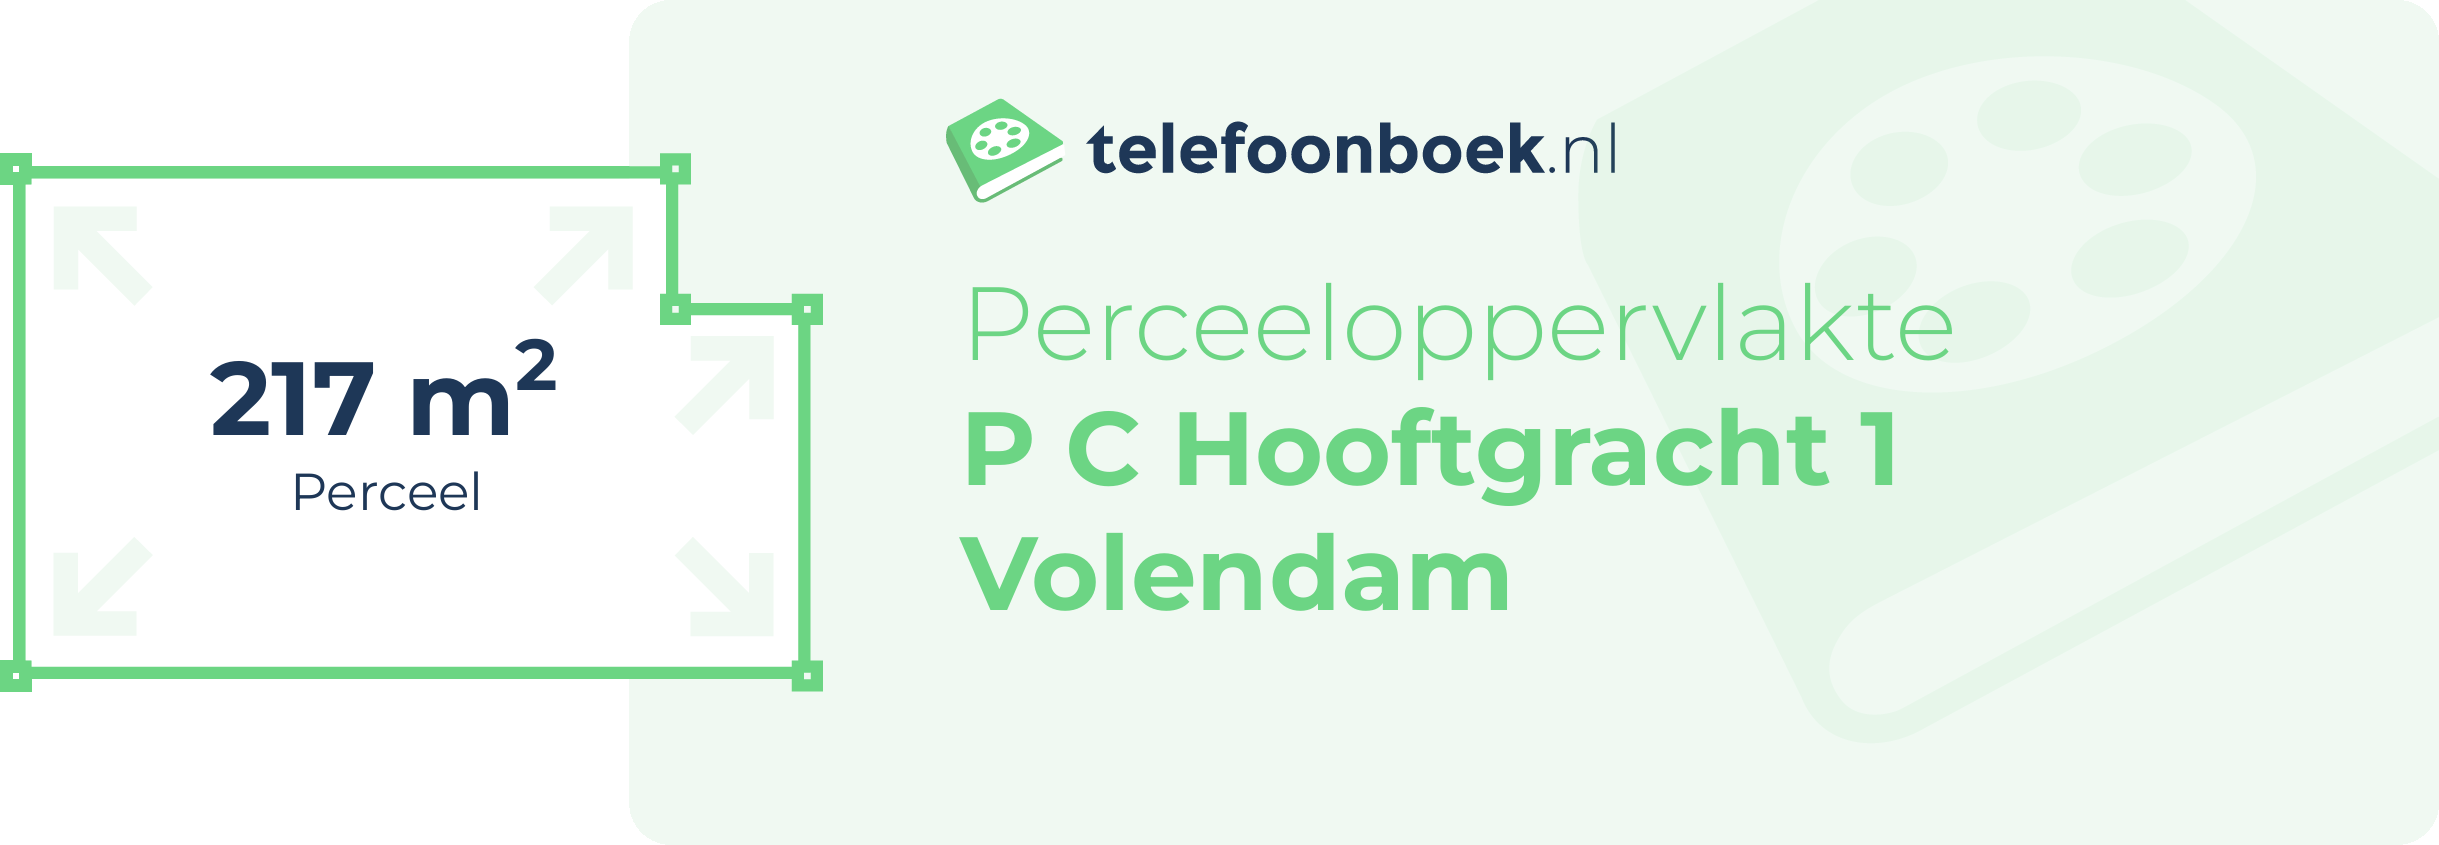 Perceeloppervlakte P C Hooftgracht 1 Volendam